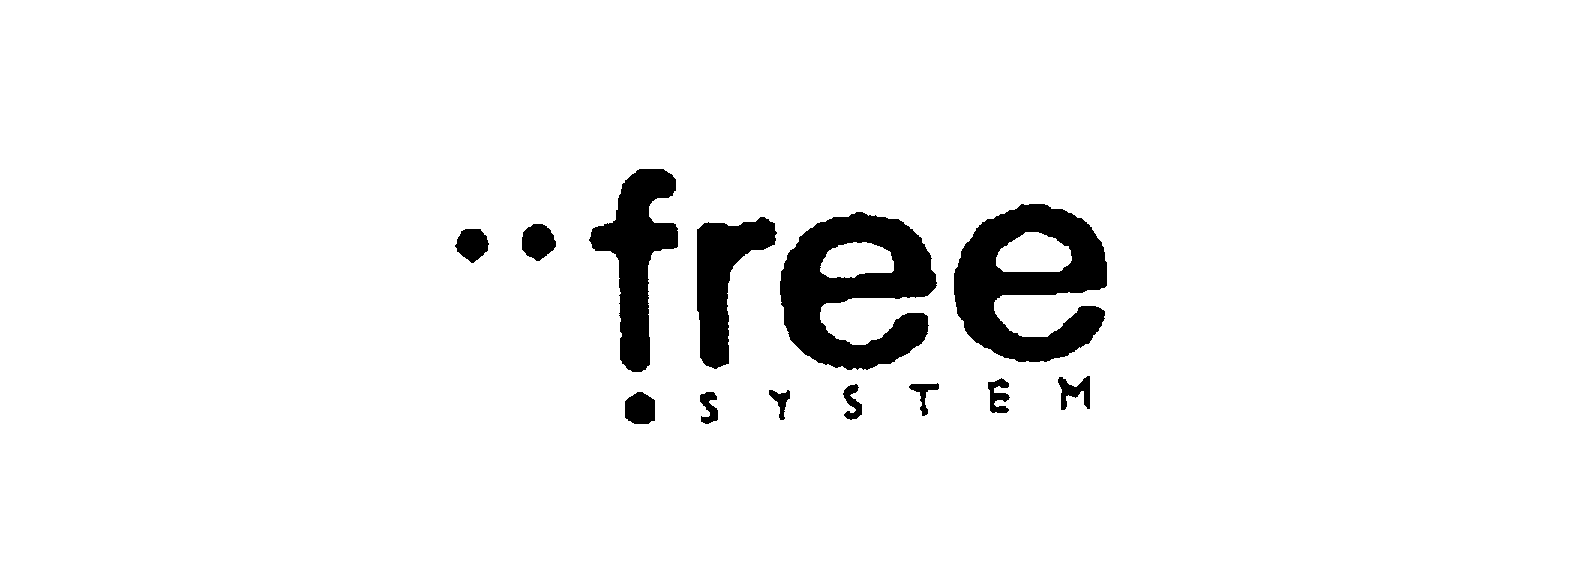  FREE SYSTEM